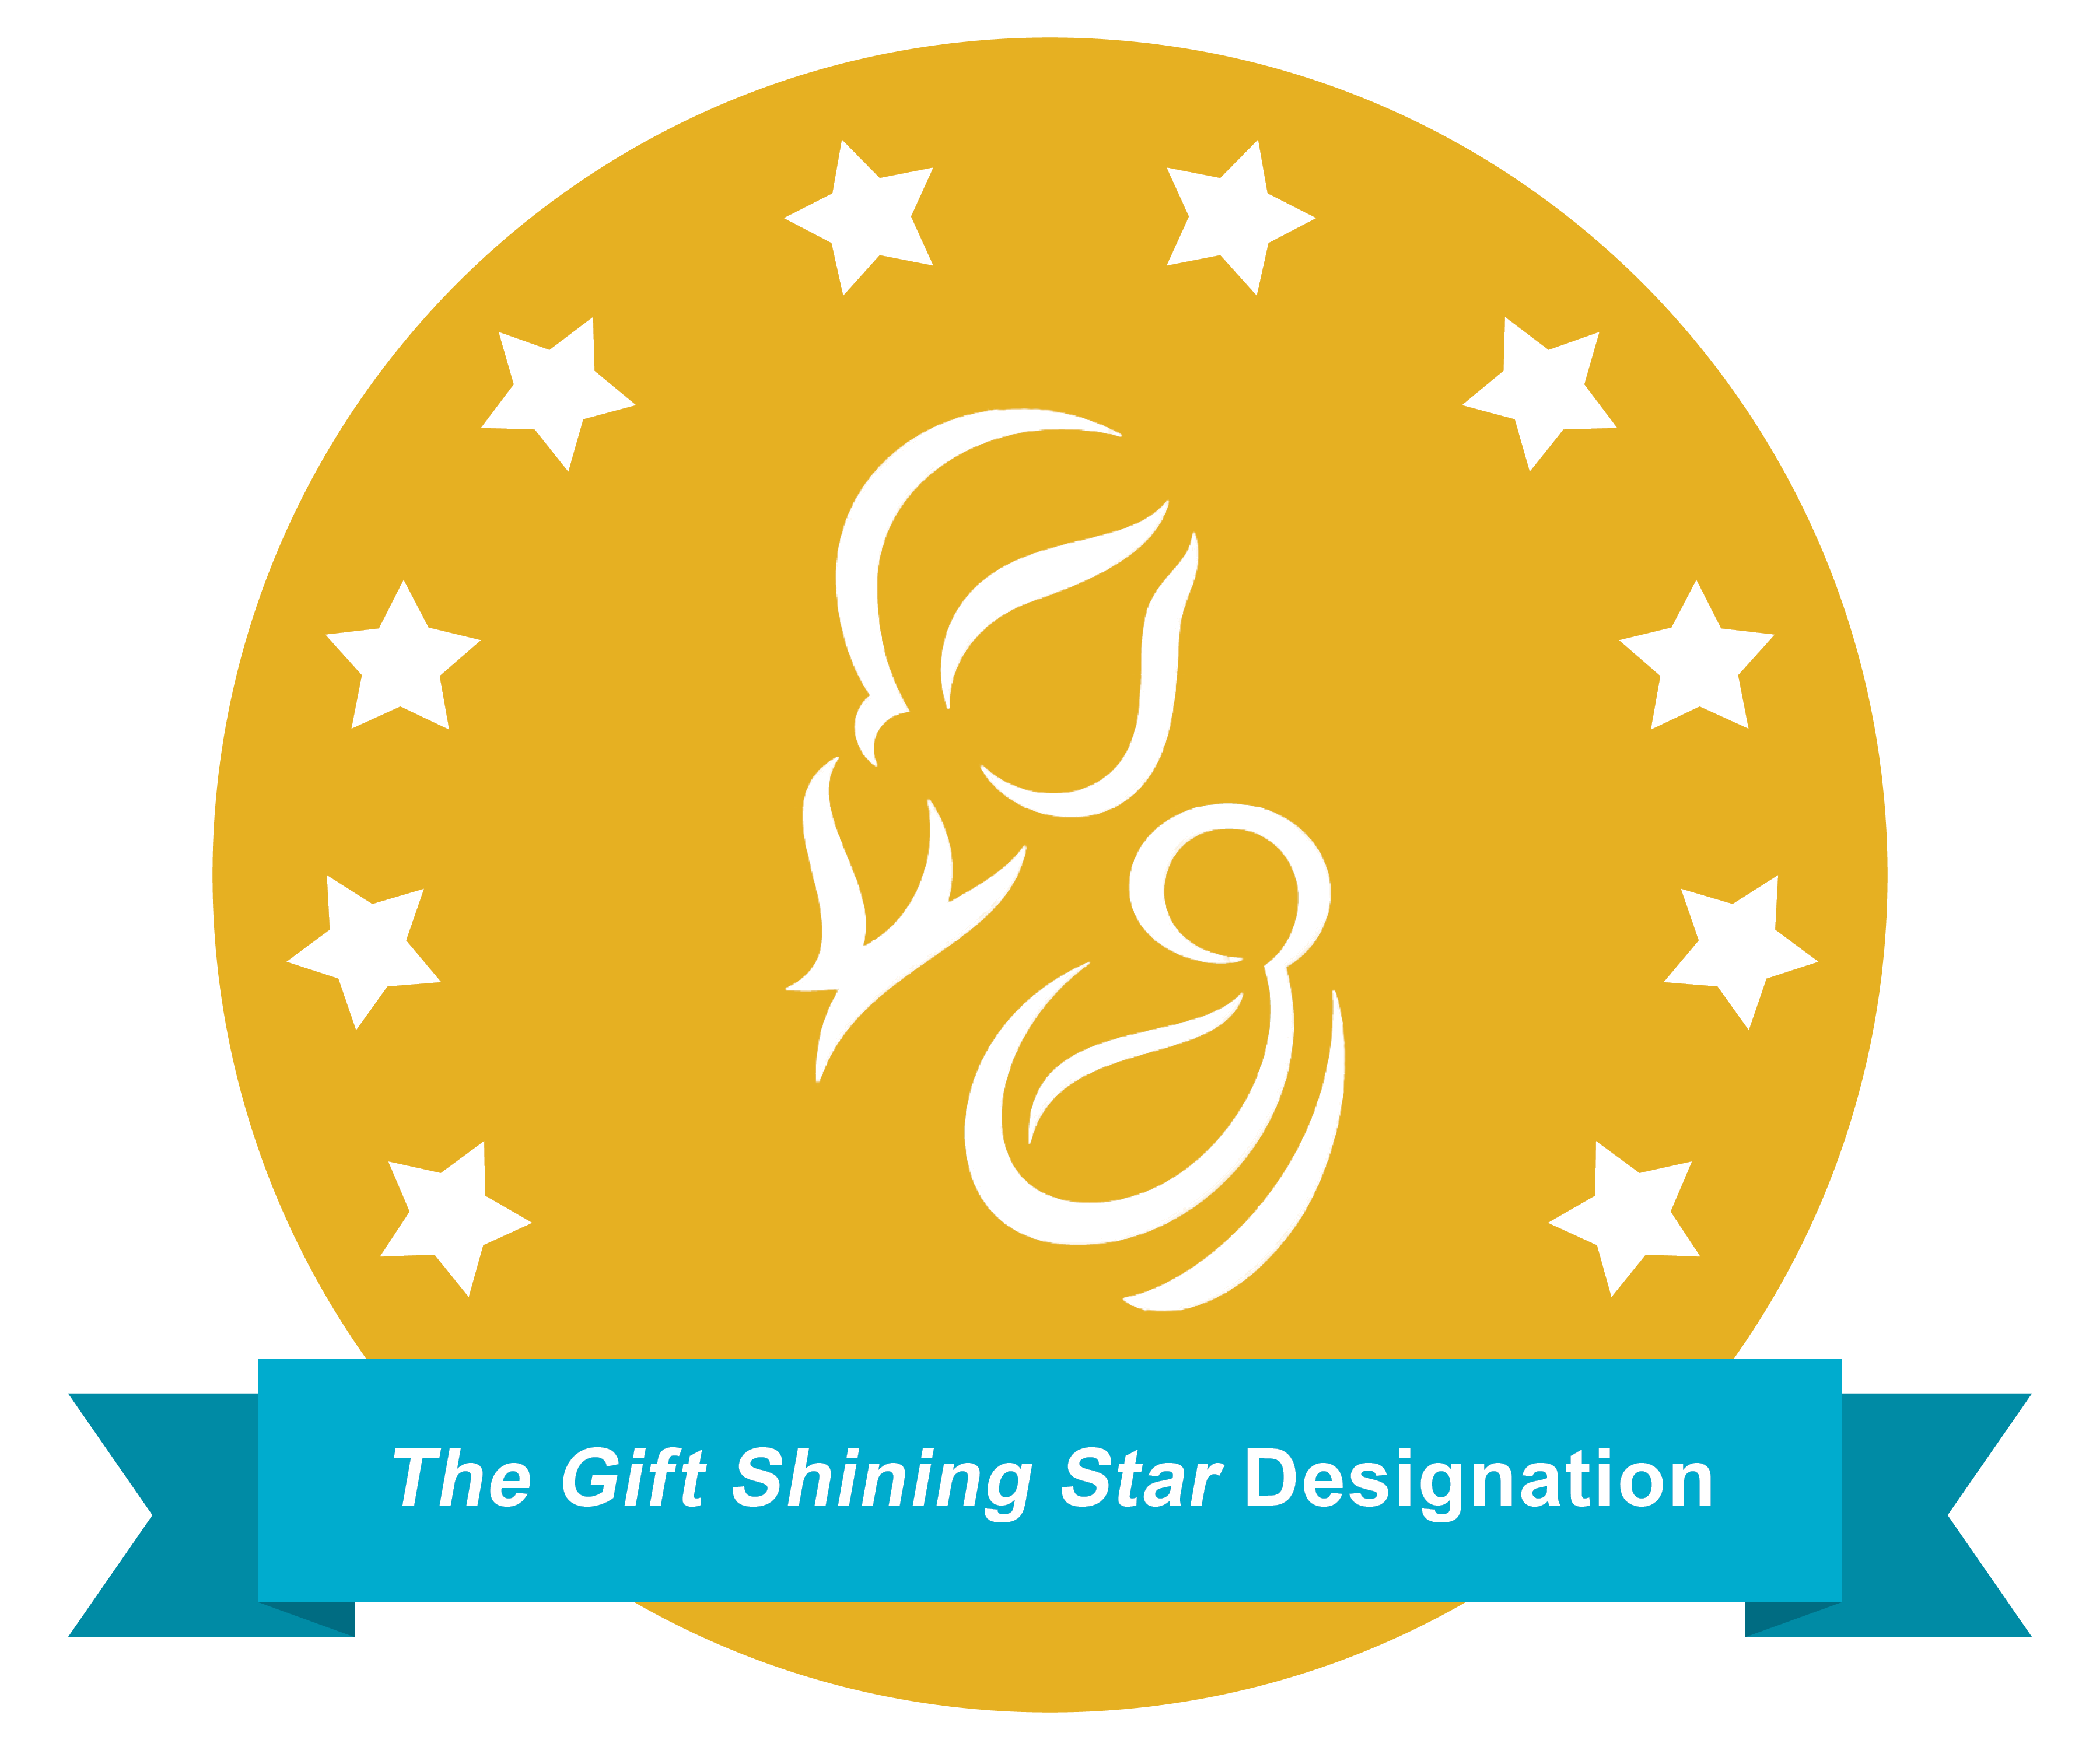 The Gift Shining Star Designation